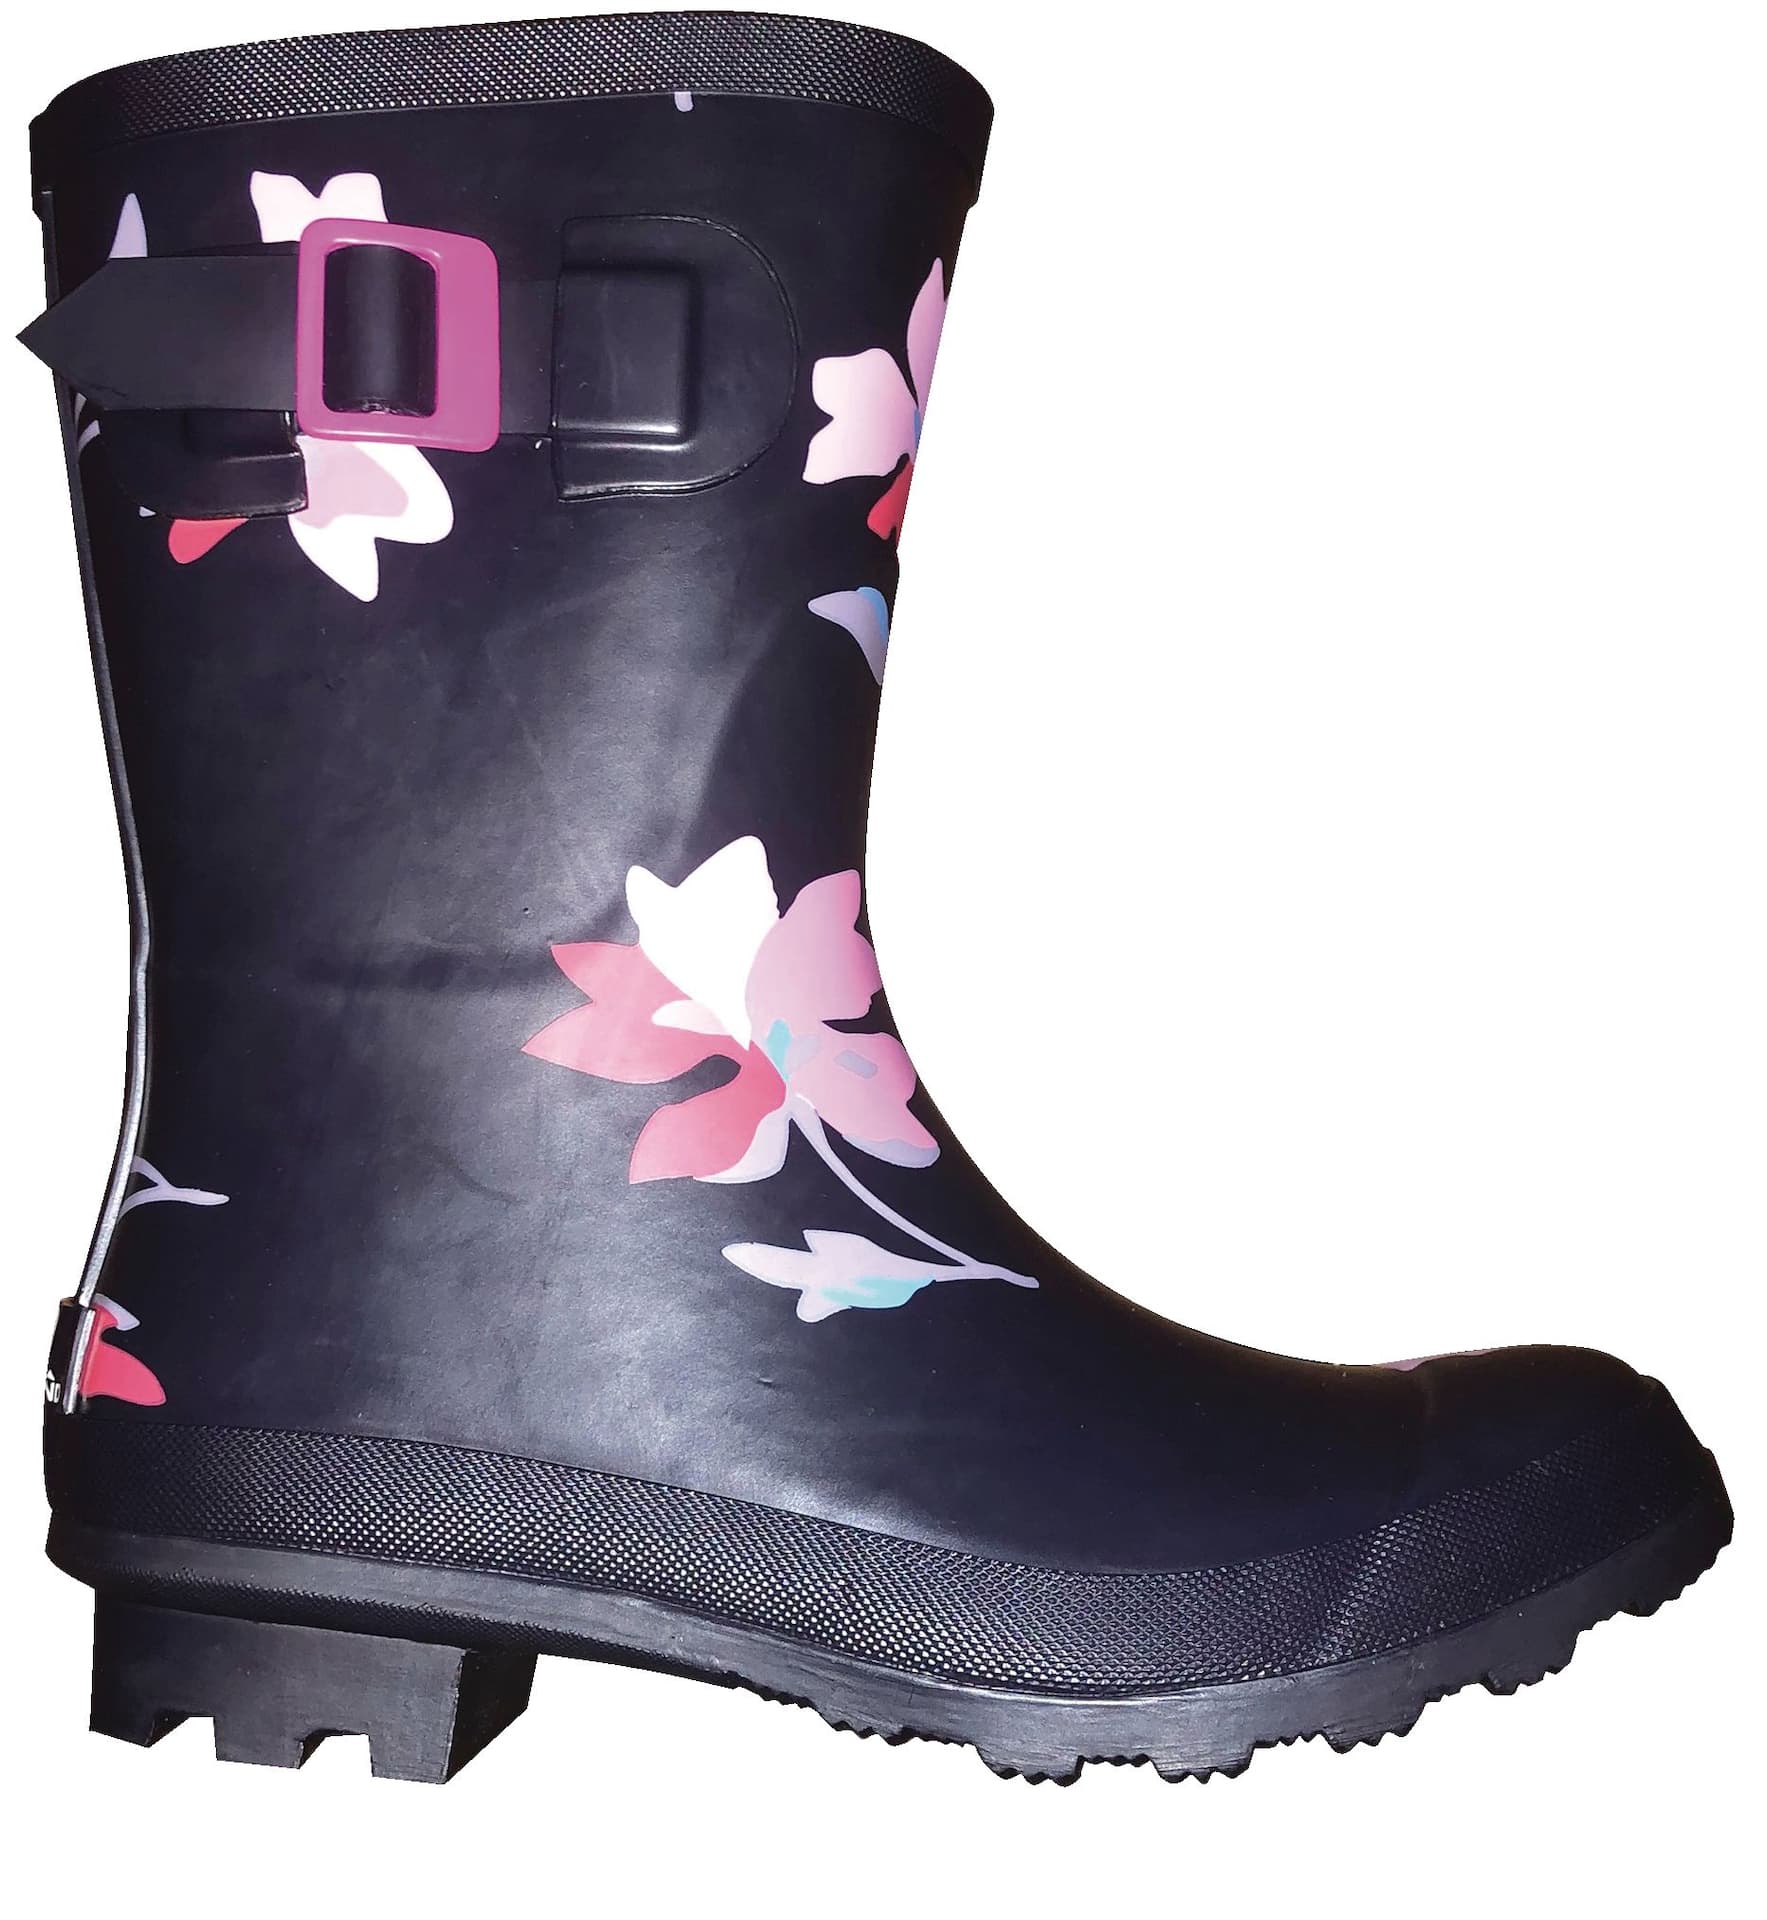 https://media-www.canadiantire.ca/product/playing/footwear-apparel/summer-footwear-apparel/1872285/outbound-women-s-flower-rubber-boot-6-ddc6e1a1-e7aa-4650-a705-73fe8dd4a4e6-jpgrendition.jpg